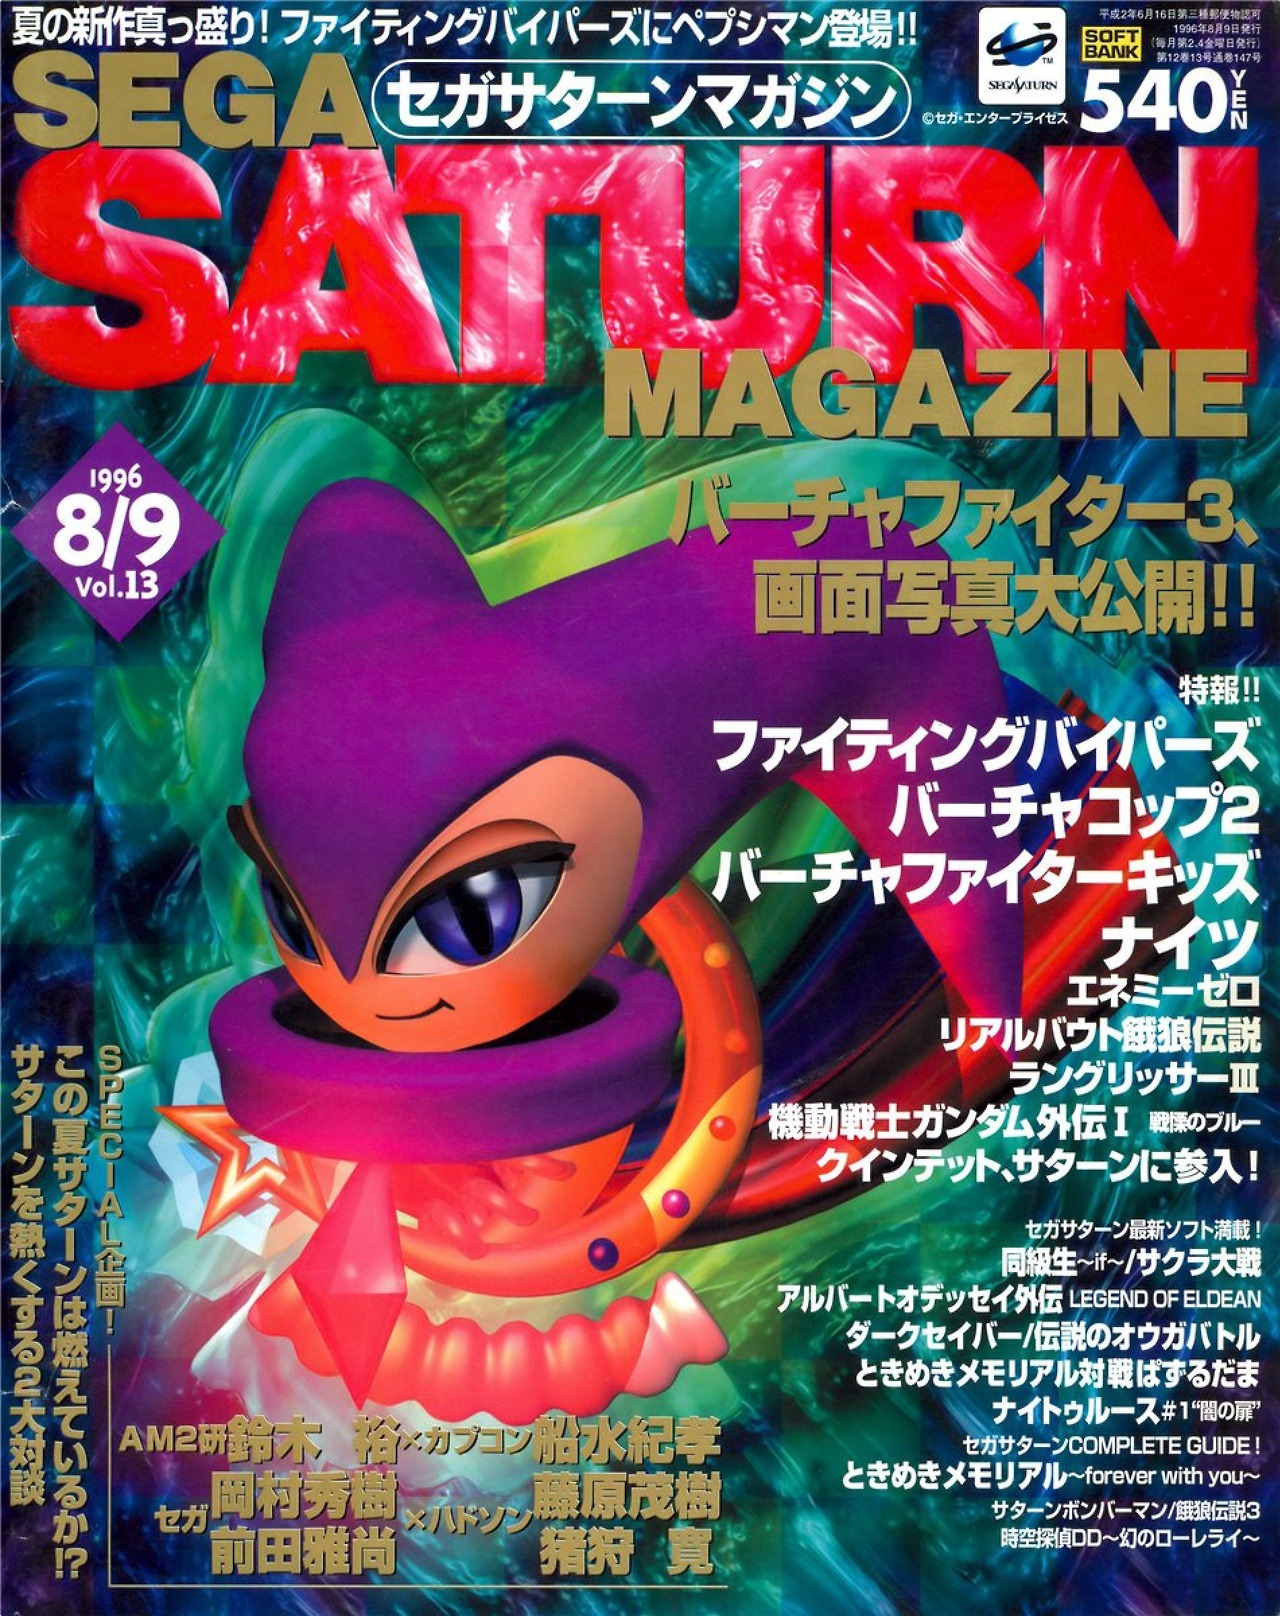 Old Game Mags — Sega Saturn Magazine JP #13, Aug 96 - Let's do...